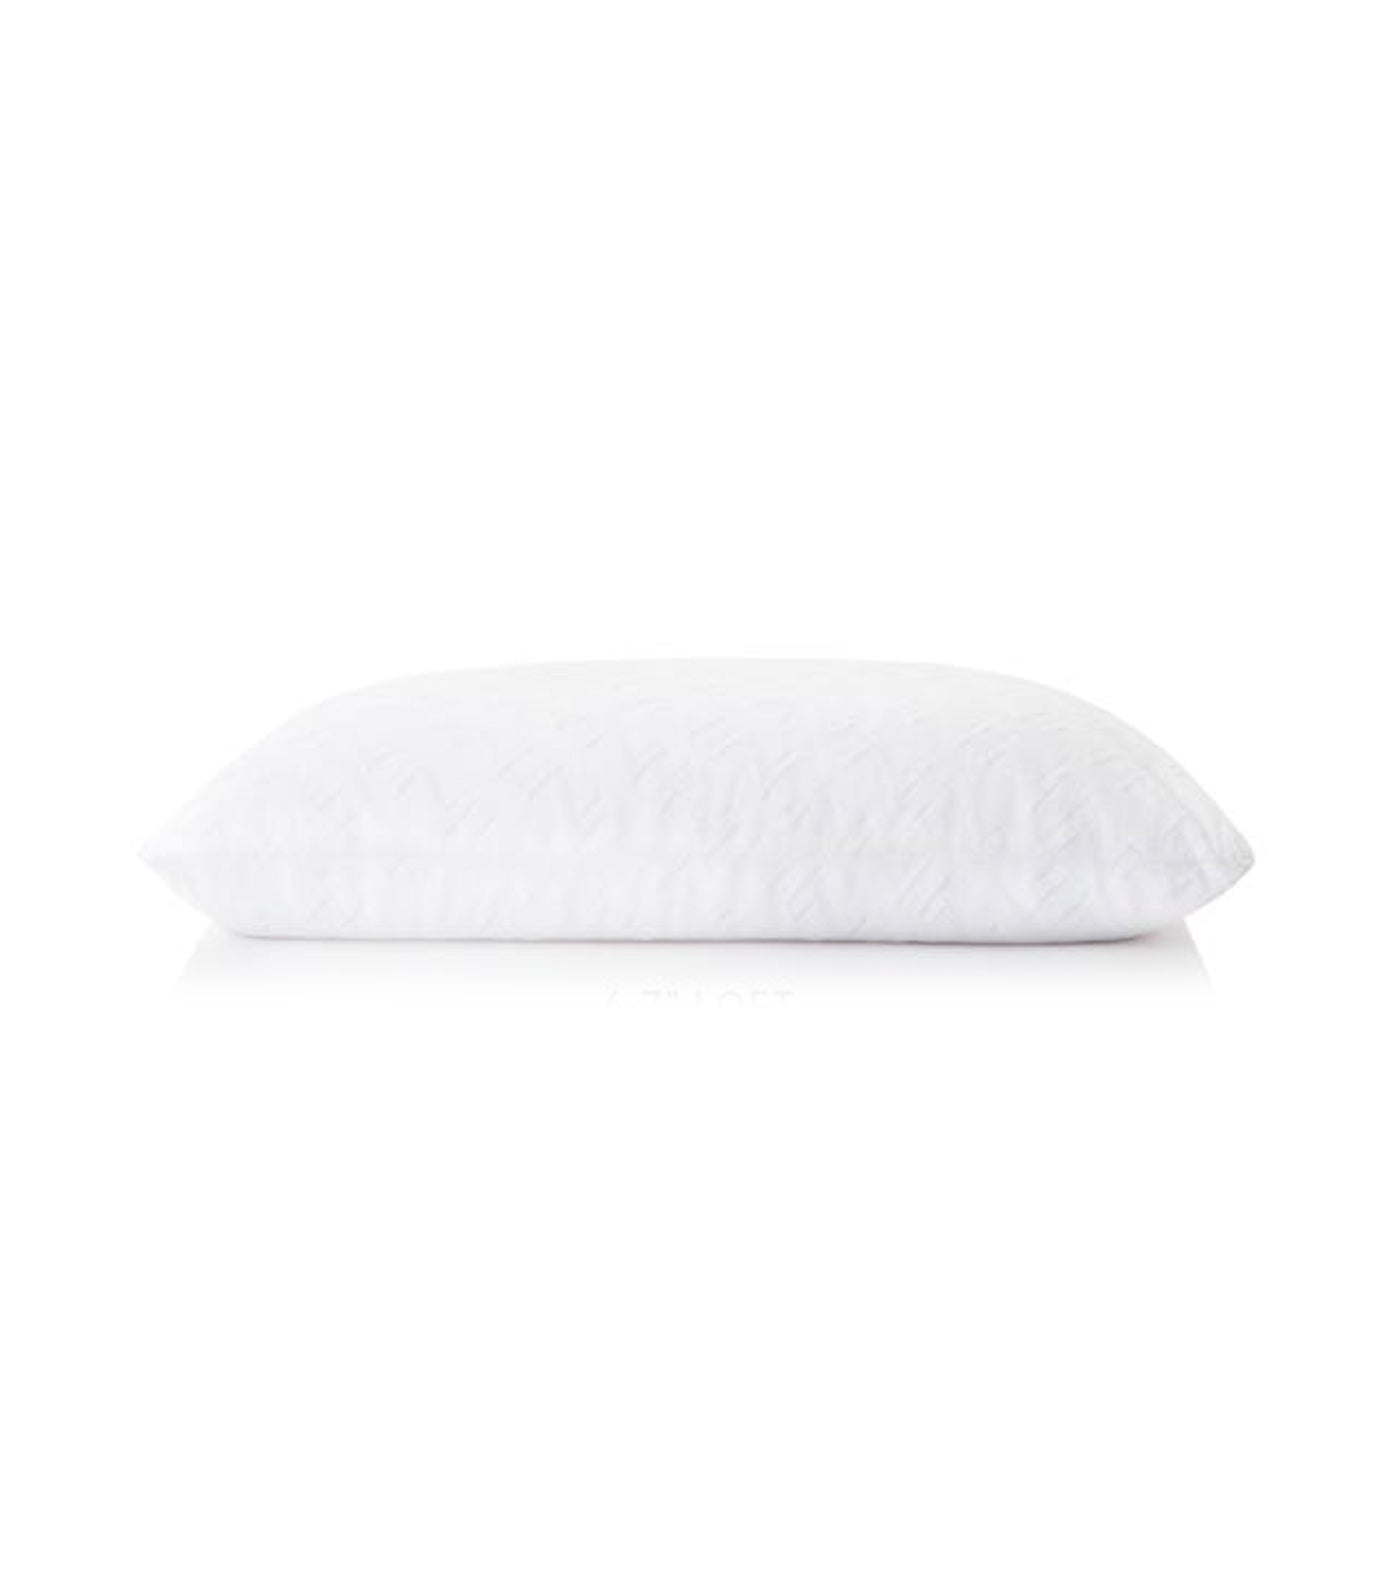 Malouf Shredded Latex Pillow